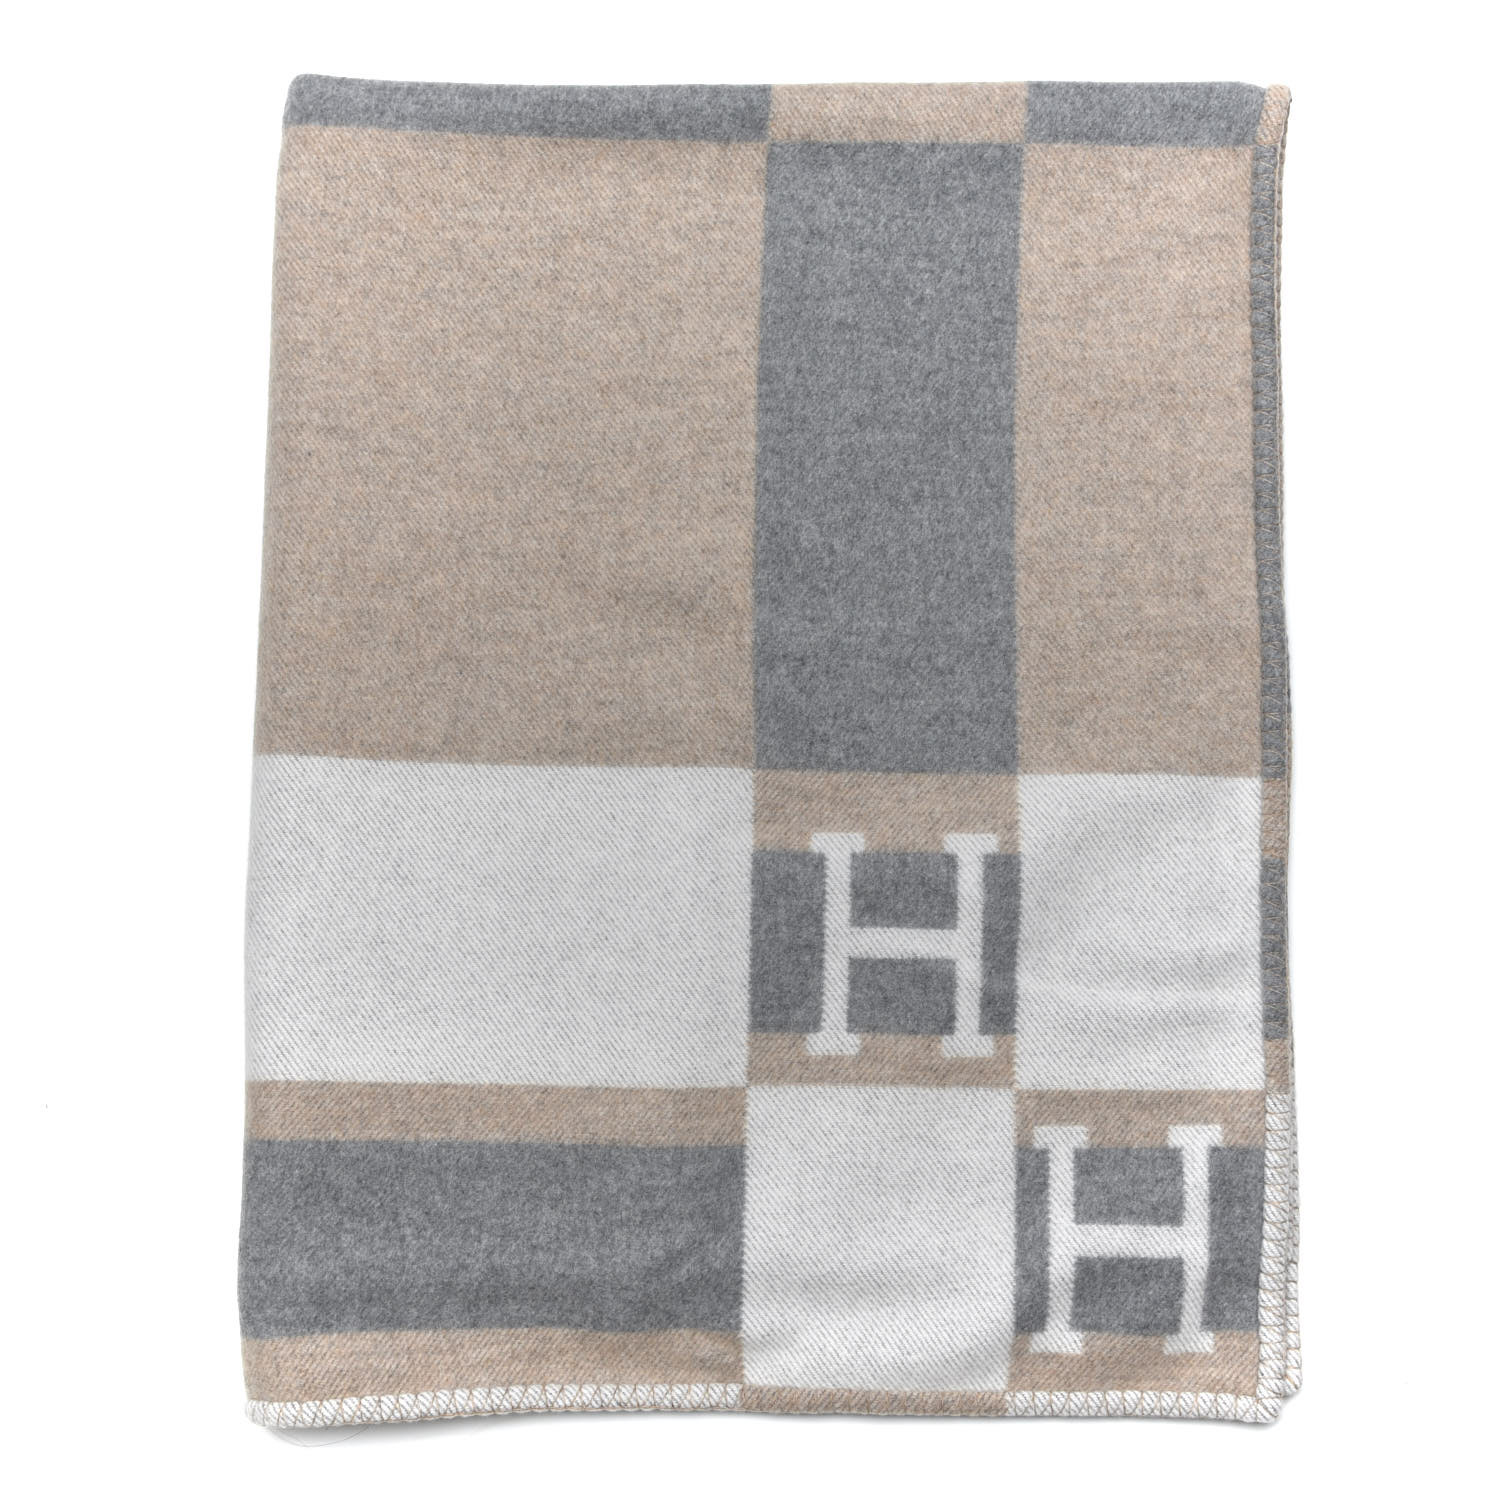 HERMES Wool Cashmere Avalon Bayadere Throw Blanket Natural 369490